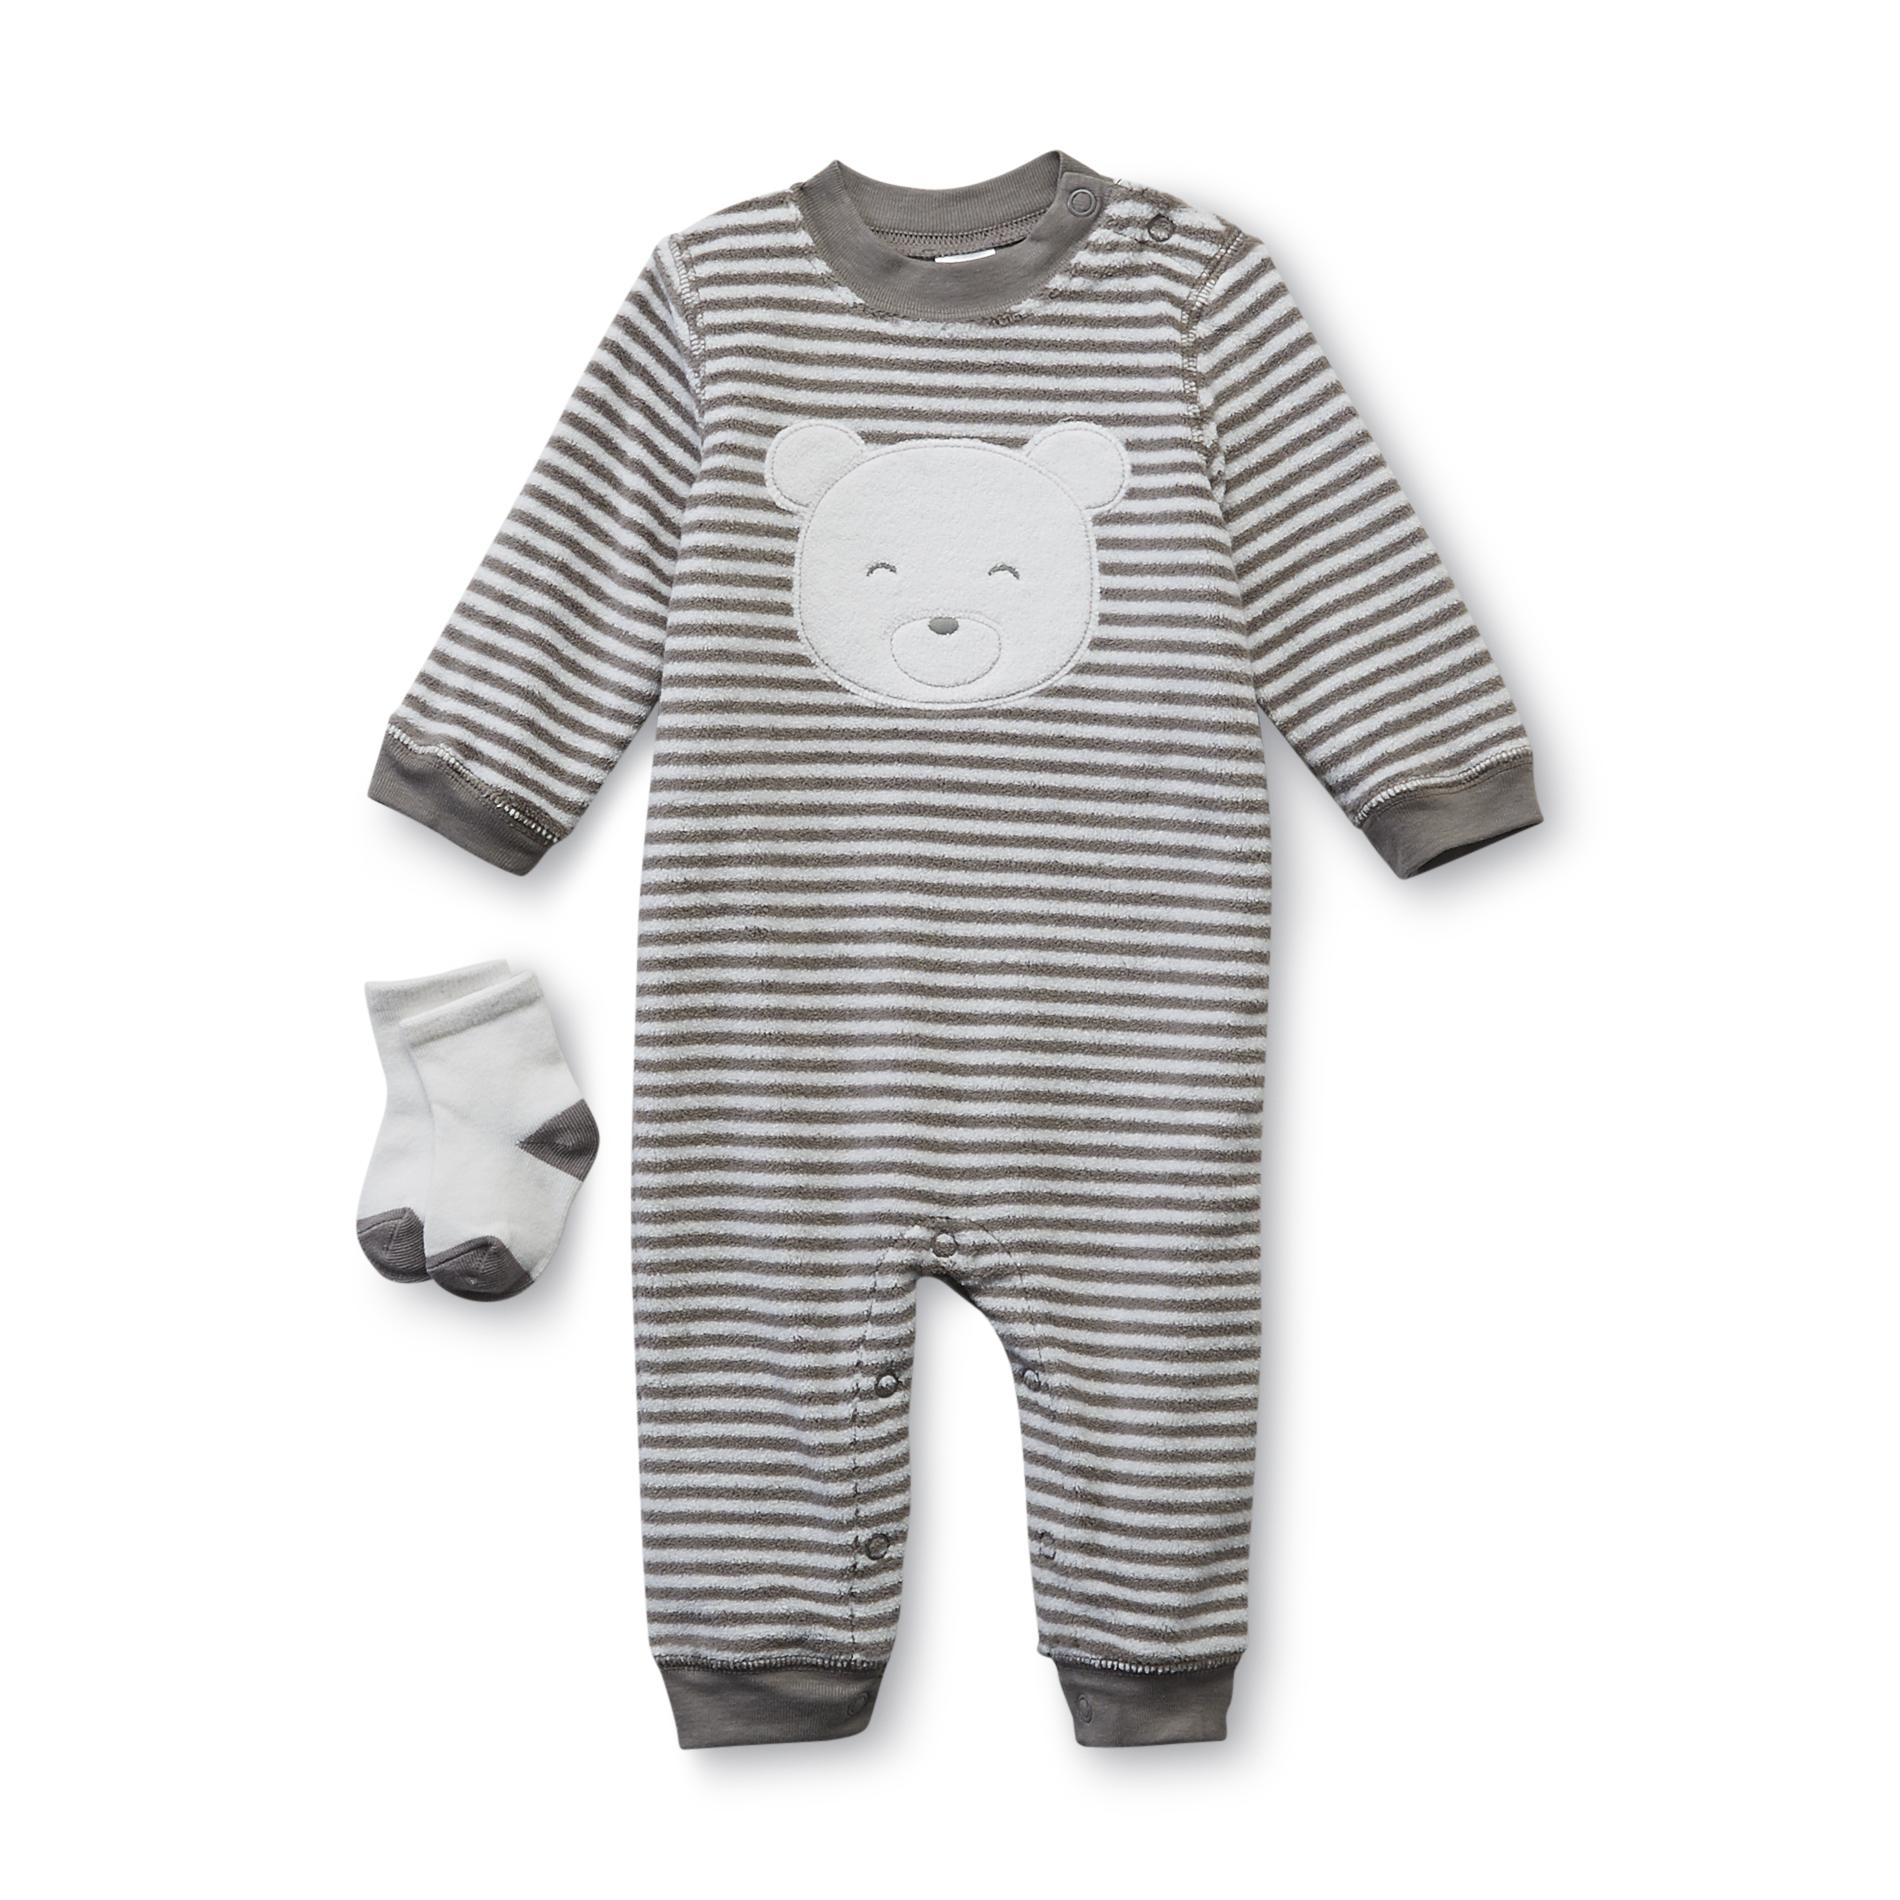 Carter's Newborn's Sleeper Pajamas & Socks - Bear